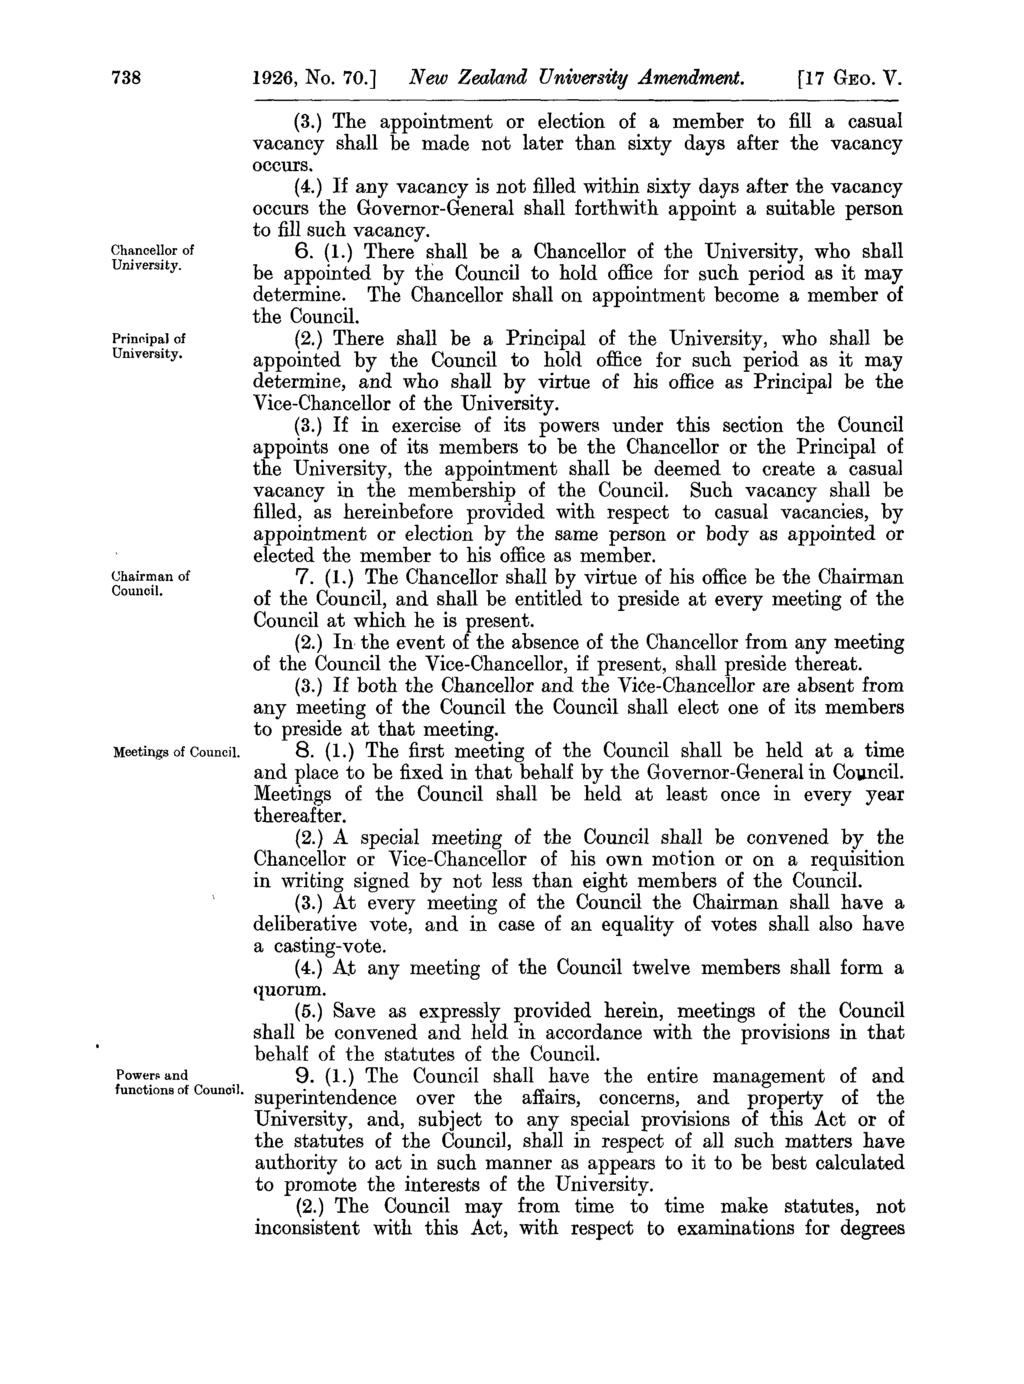 738 1926, No. 70.] New Zealand University A.mendment. [17 GEO. V. Chancellor of University. Prin"ipaJ of University. Uhairman of Coulloil. Meetings of Council. (3.